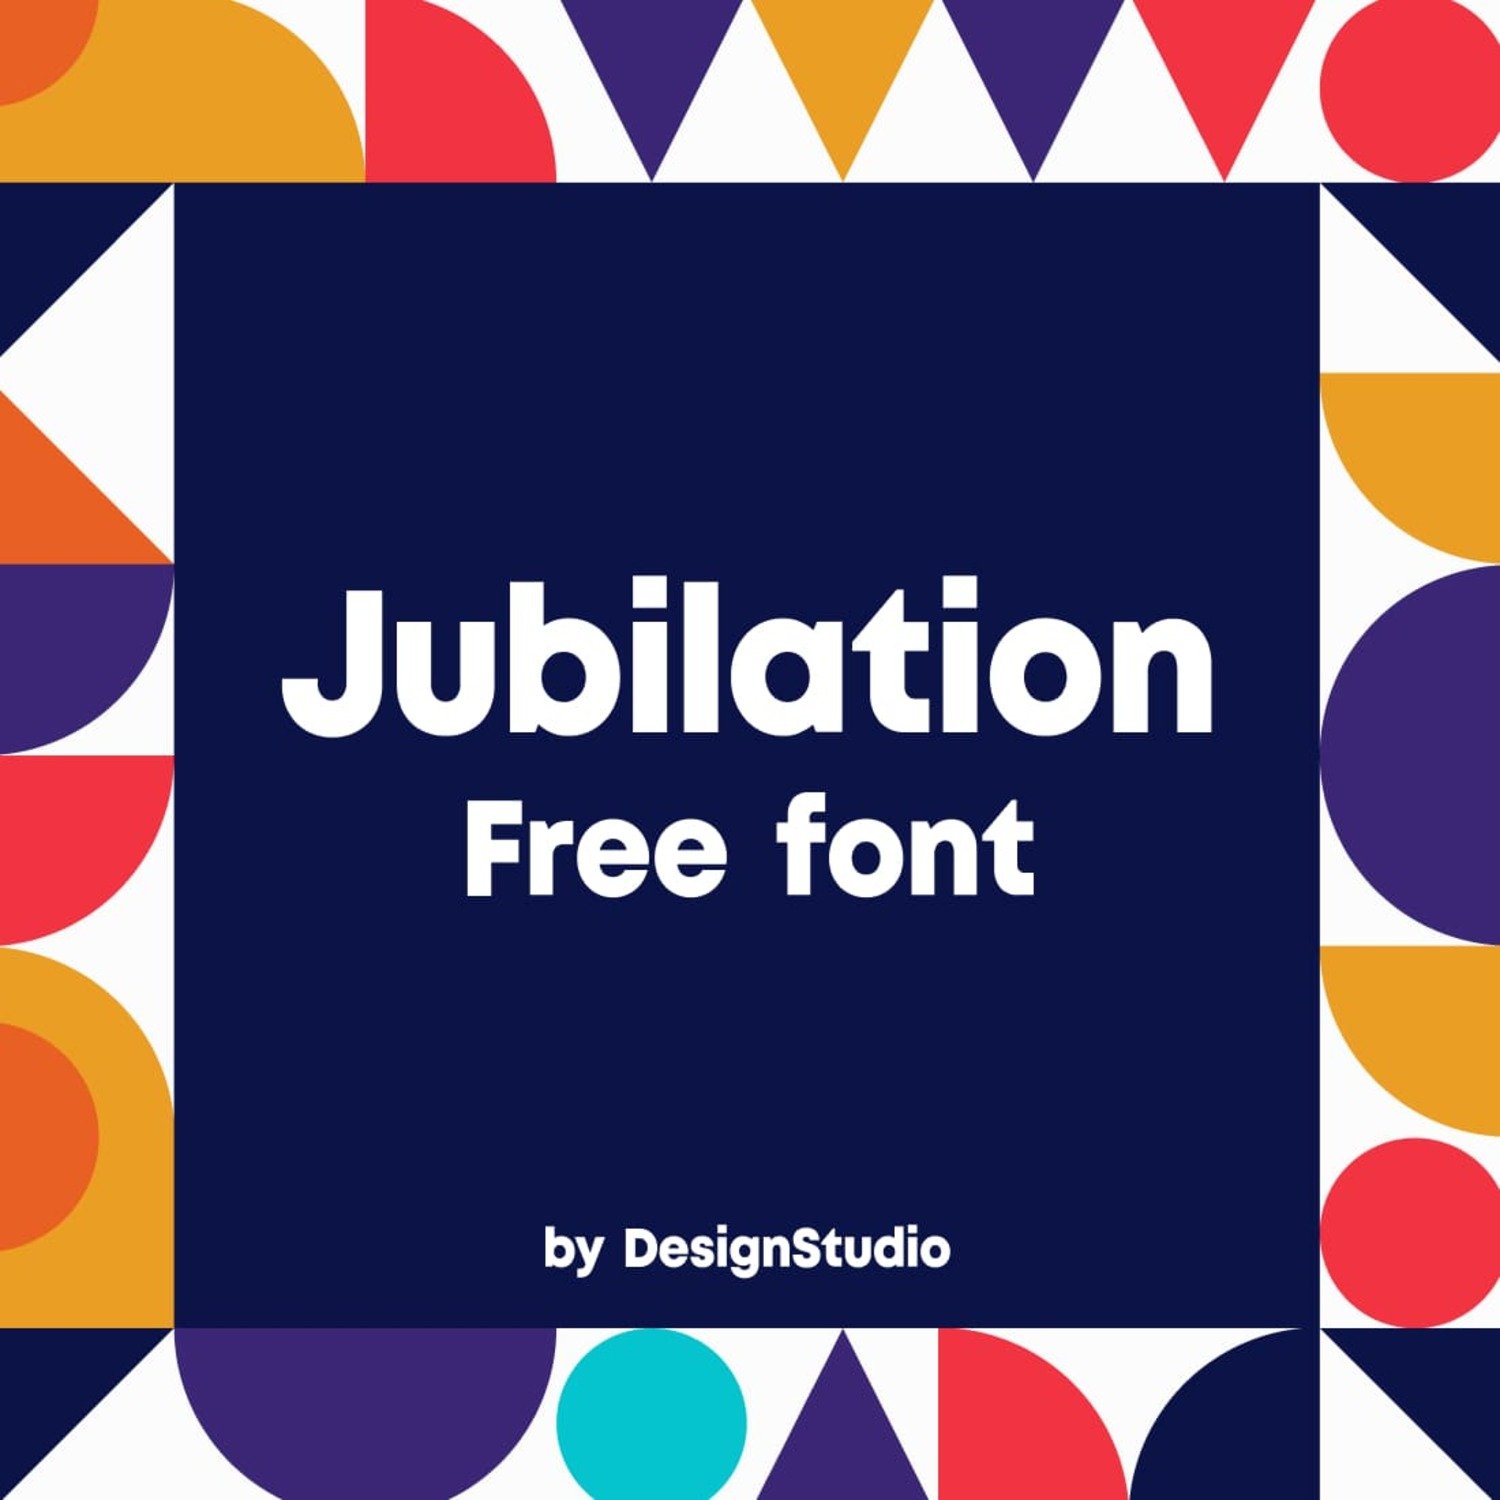 Jubilation Monospaced Sans Serif Font main cover.